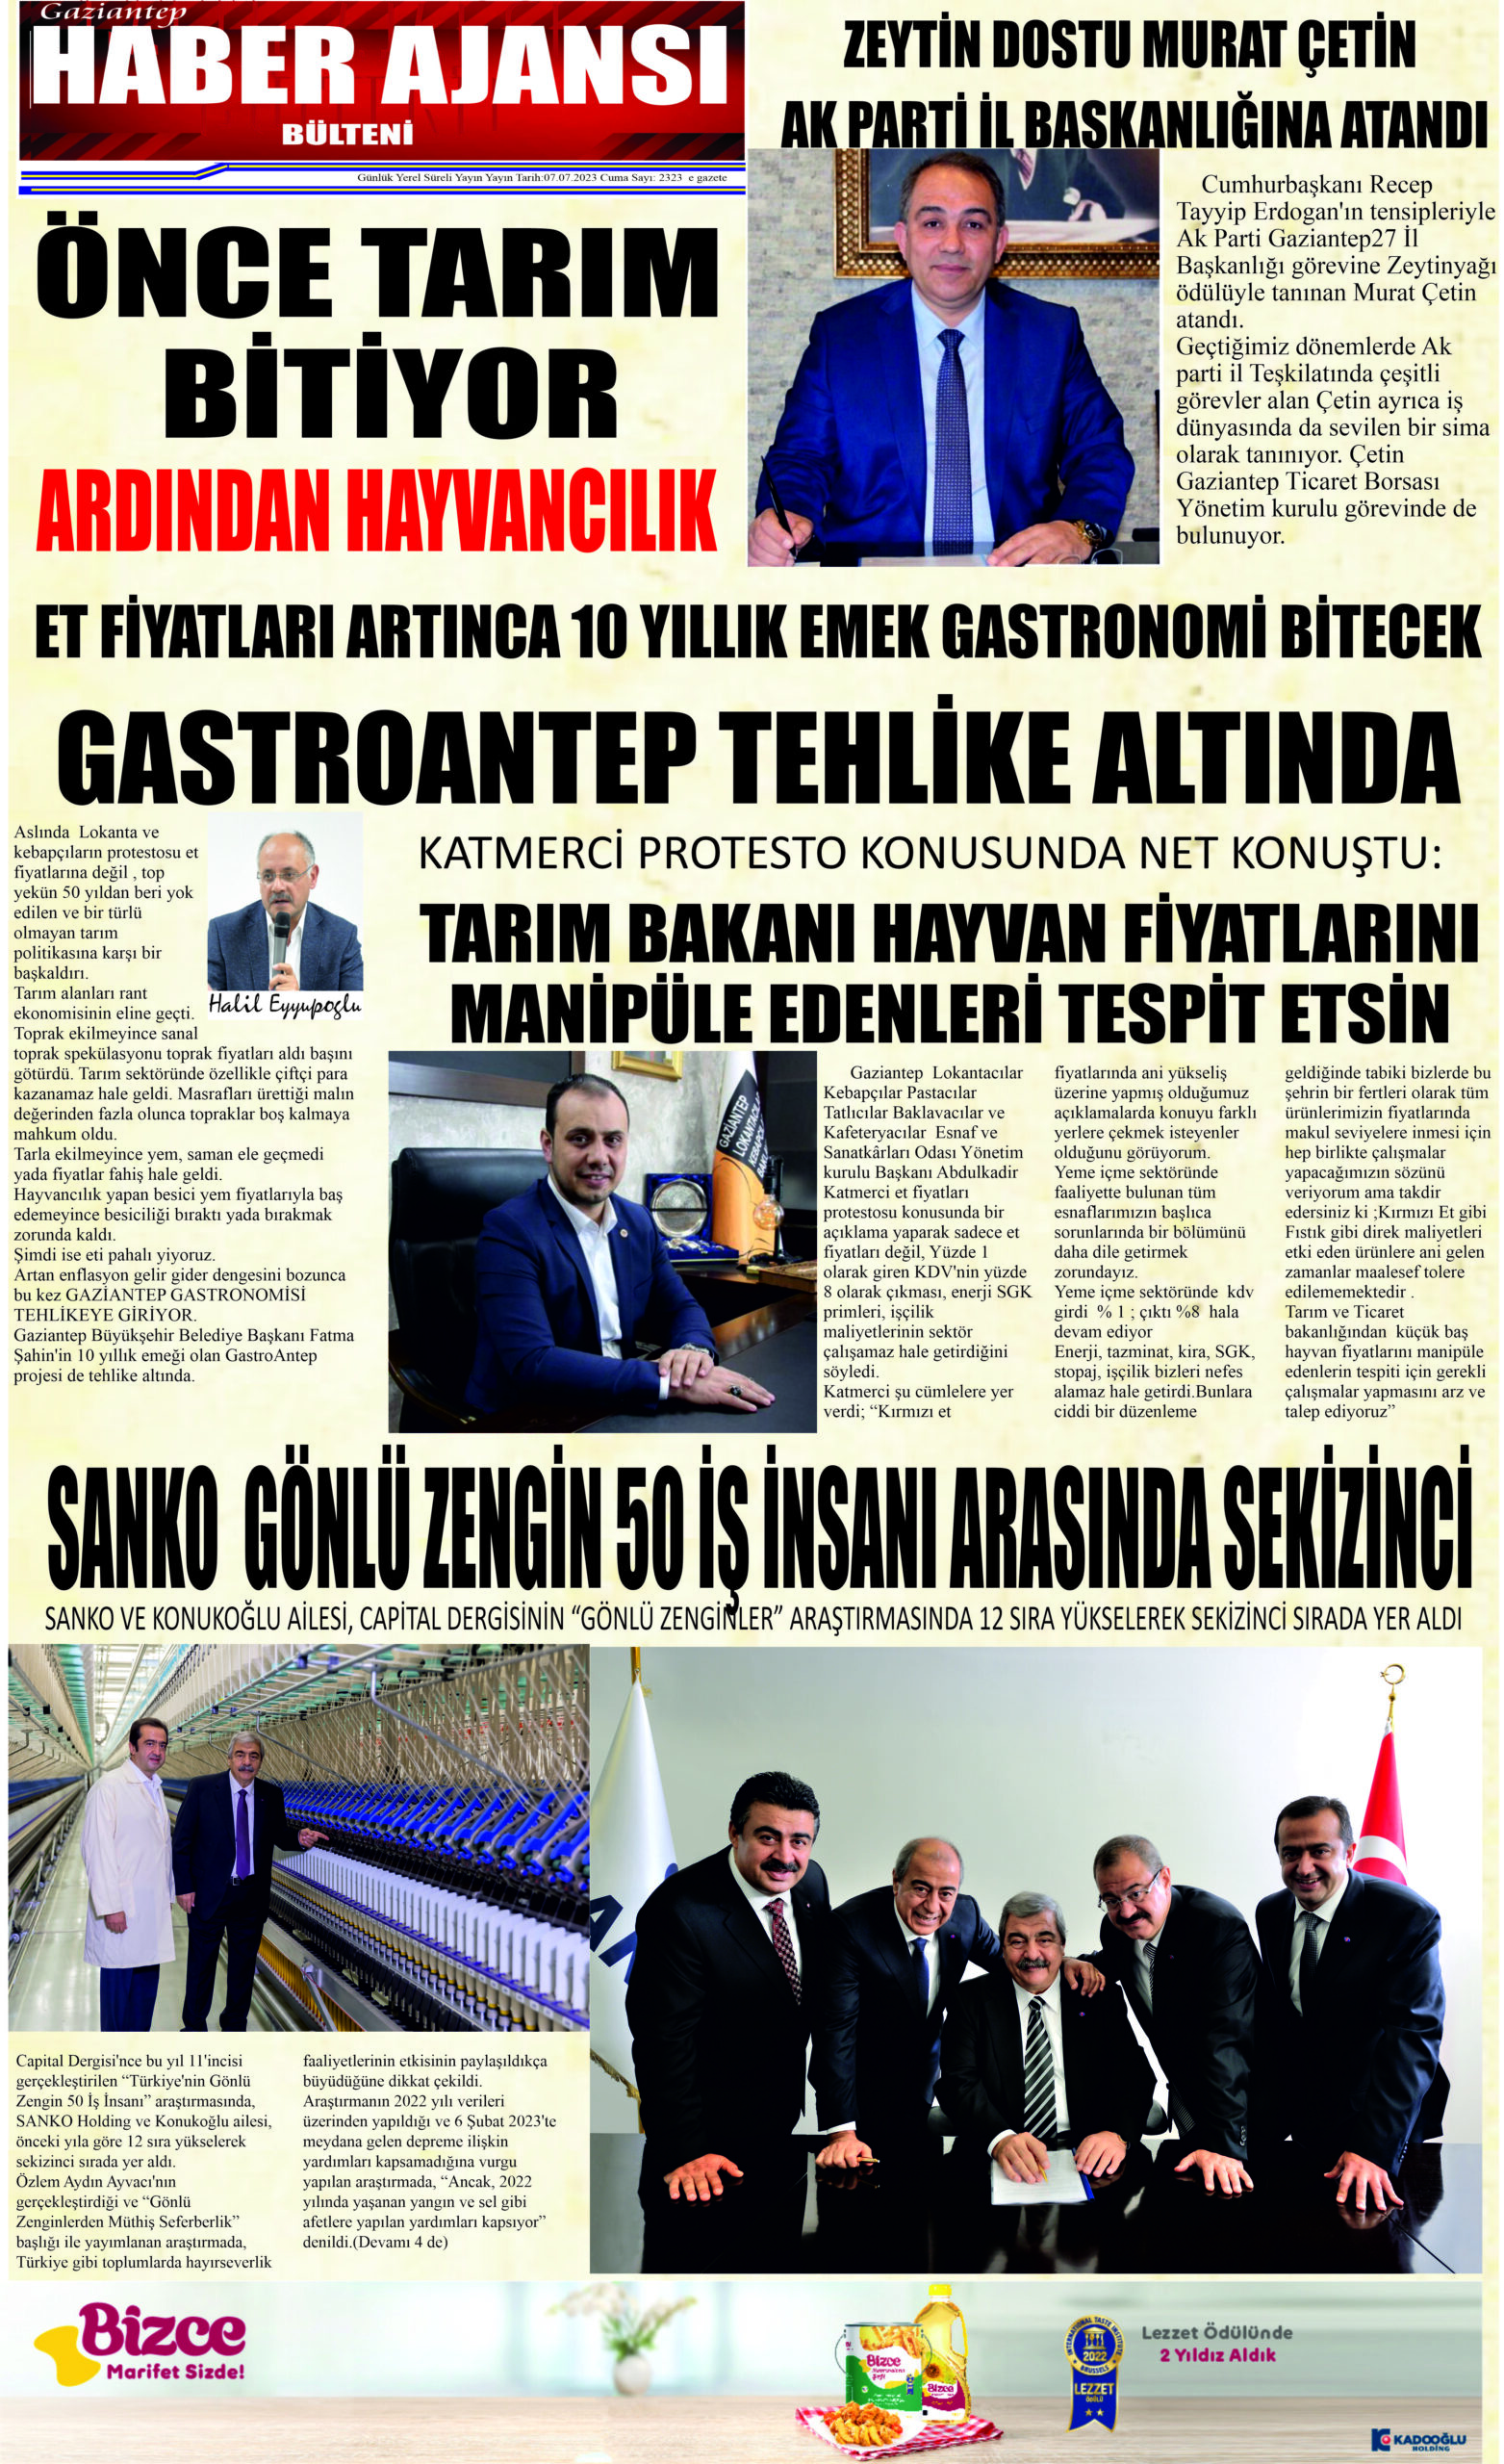 Gaziantep Haber Ajansı Bülteni Cuma 07.07.2023 e gazete